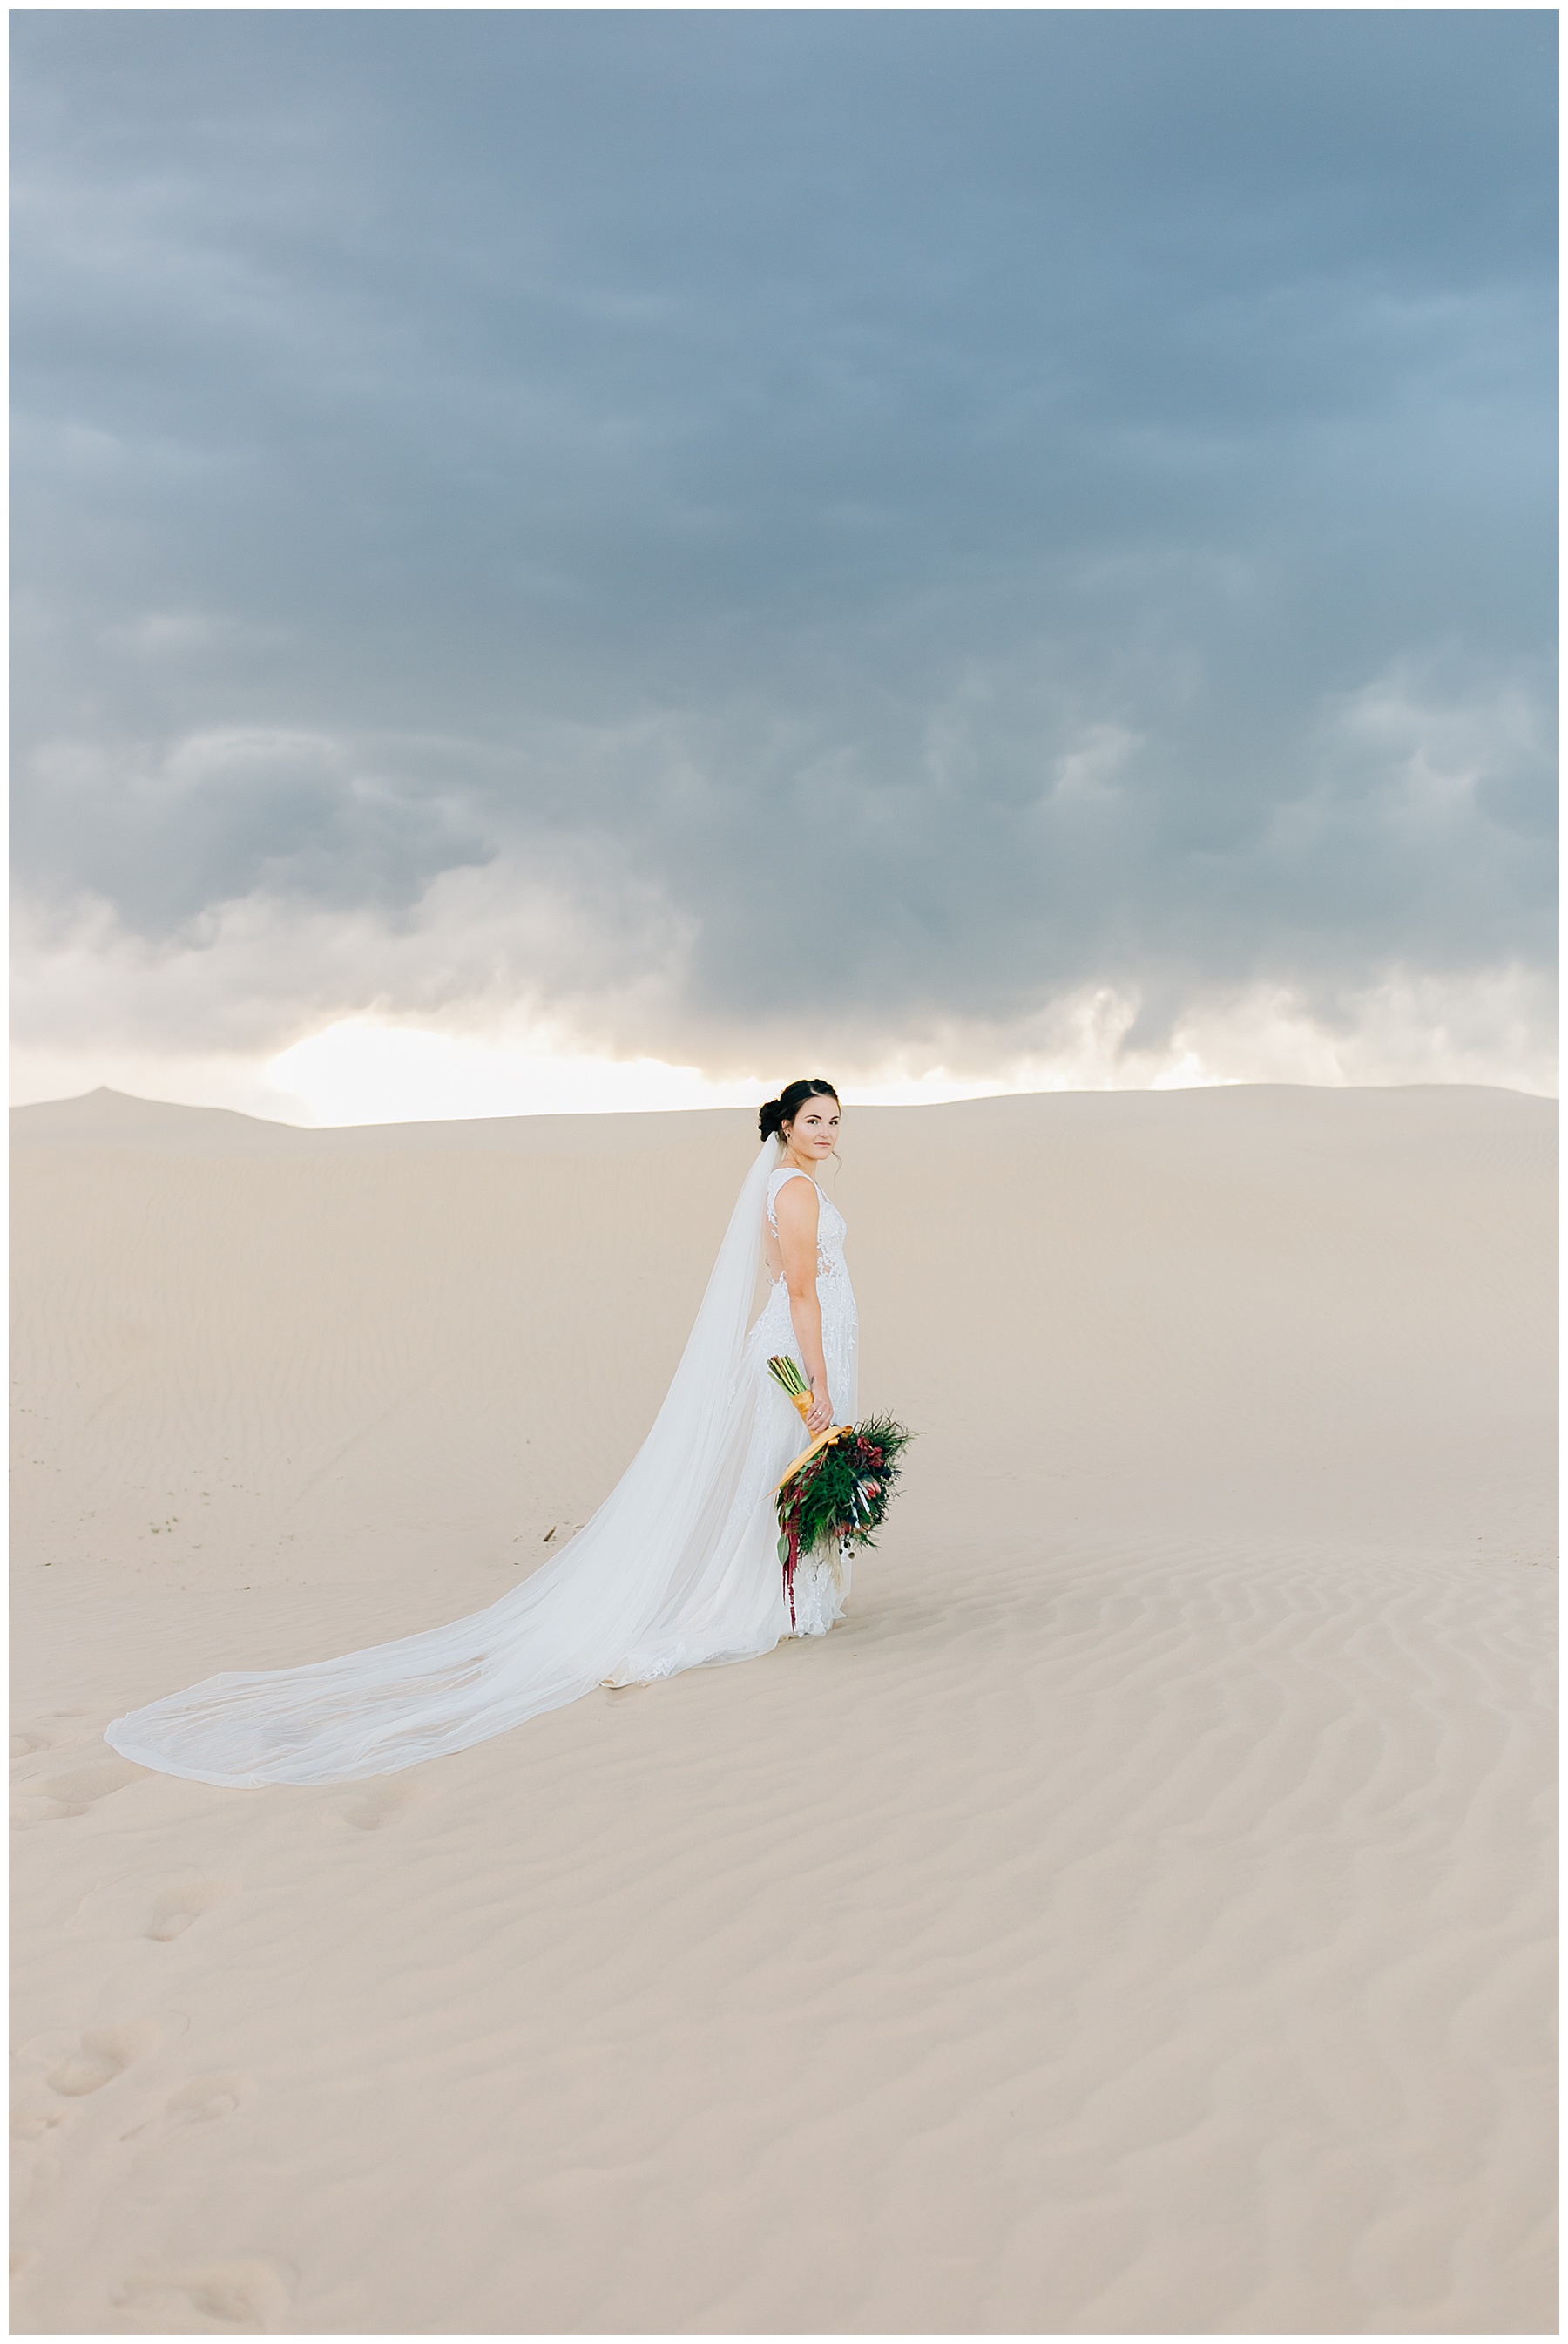 Kassy | Little Sahara Sand Dunes Bridals | Taco Bell Bride